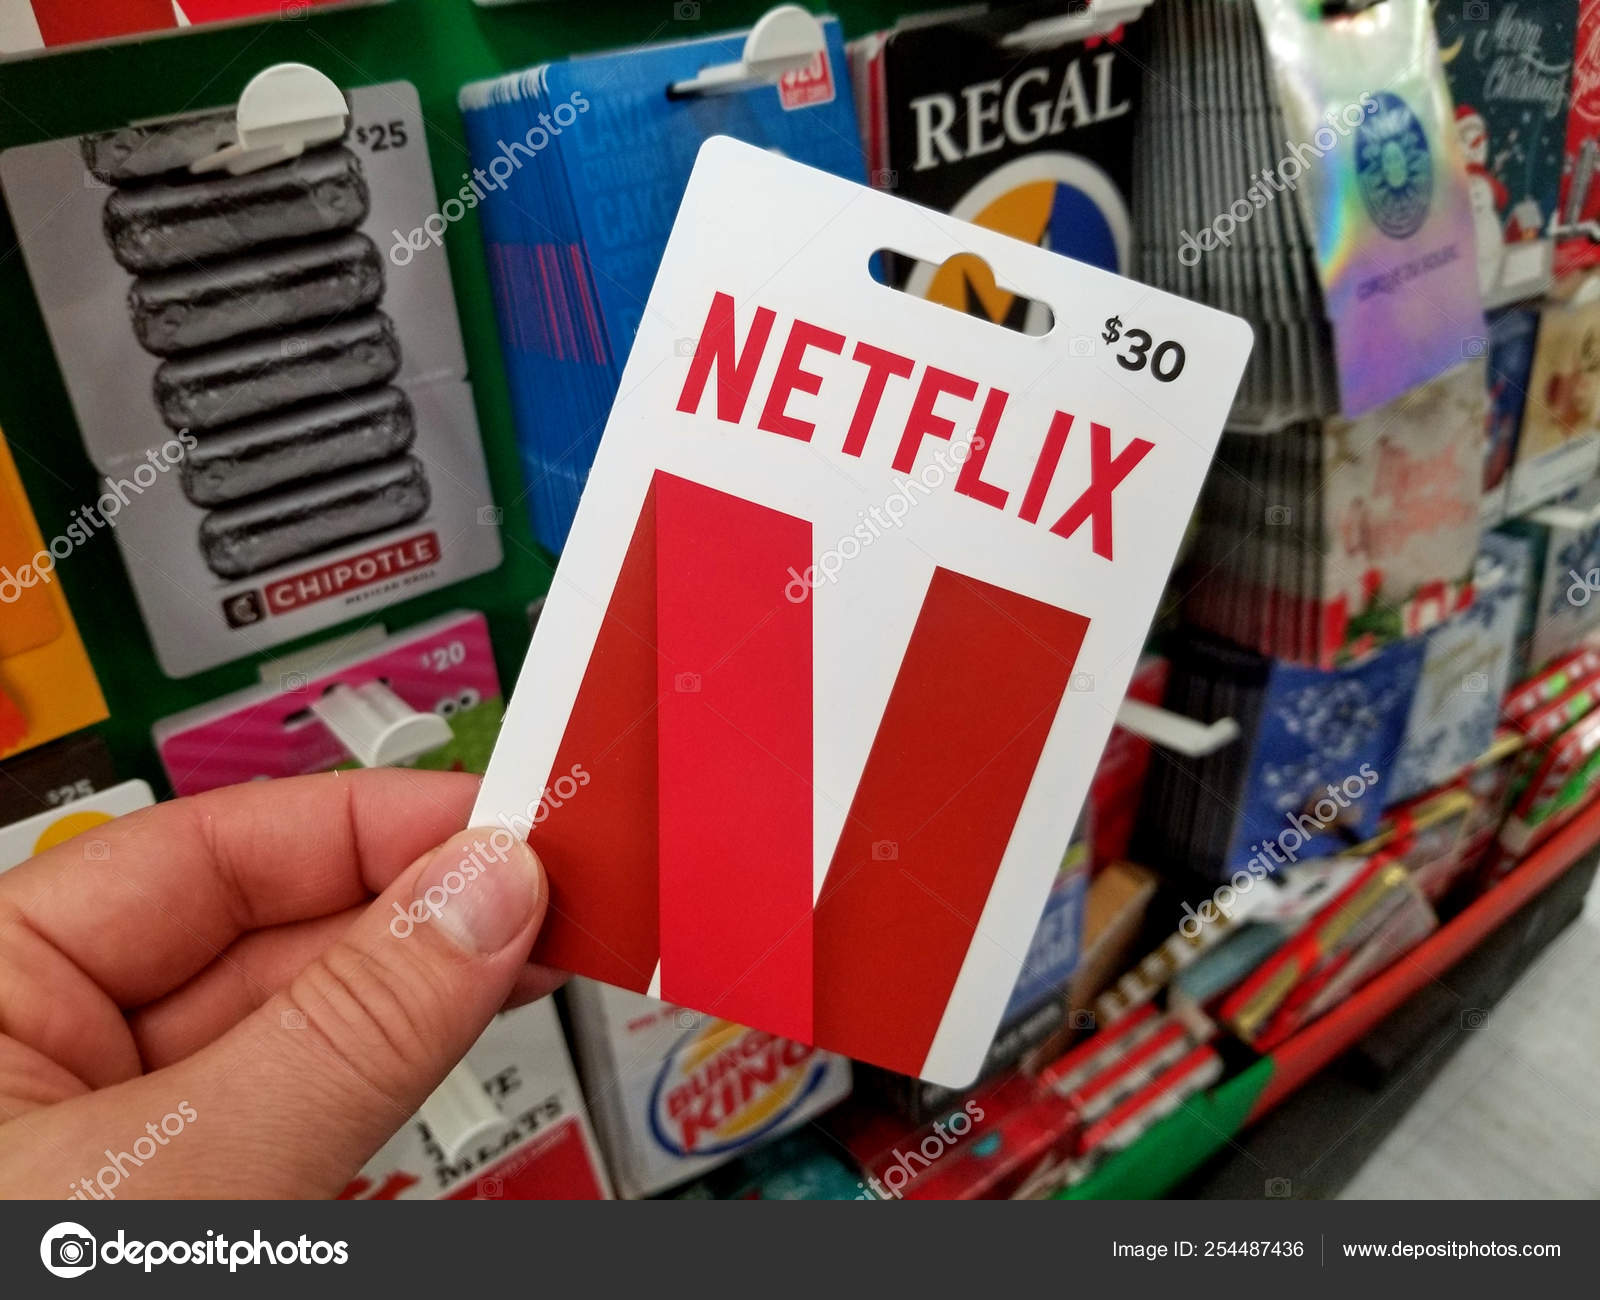 Netflix Gift Card In A Hand Stock Editorial Photo C Dennizn 254487436 - roblox gift card brasil